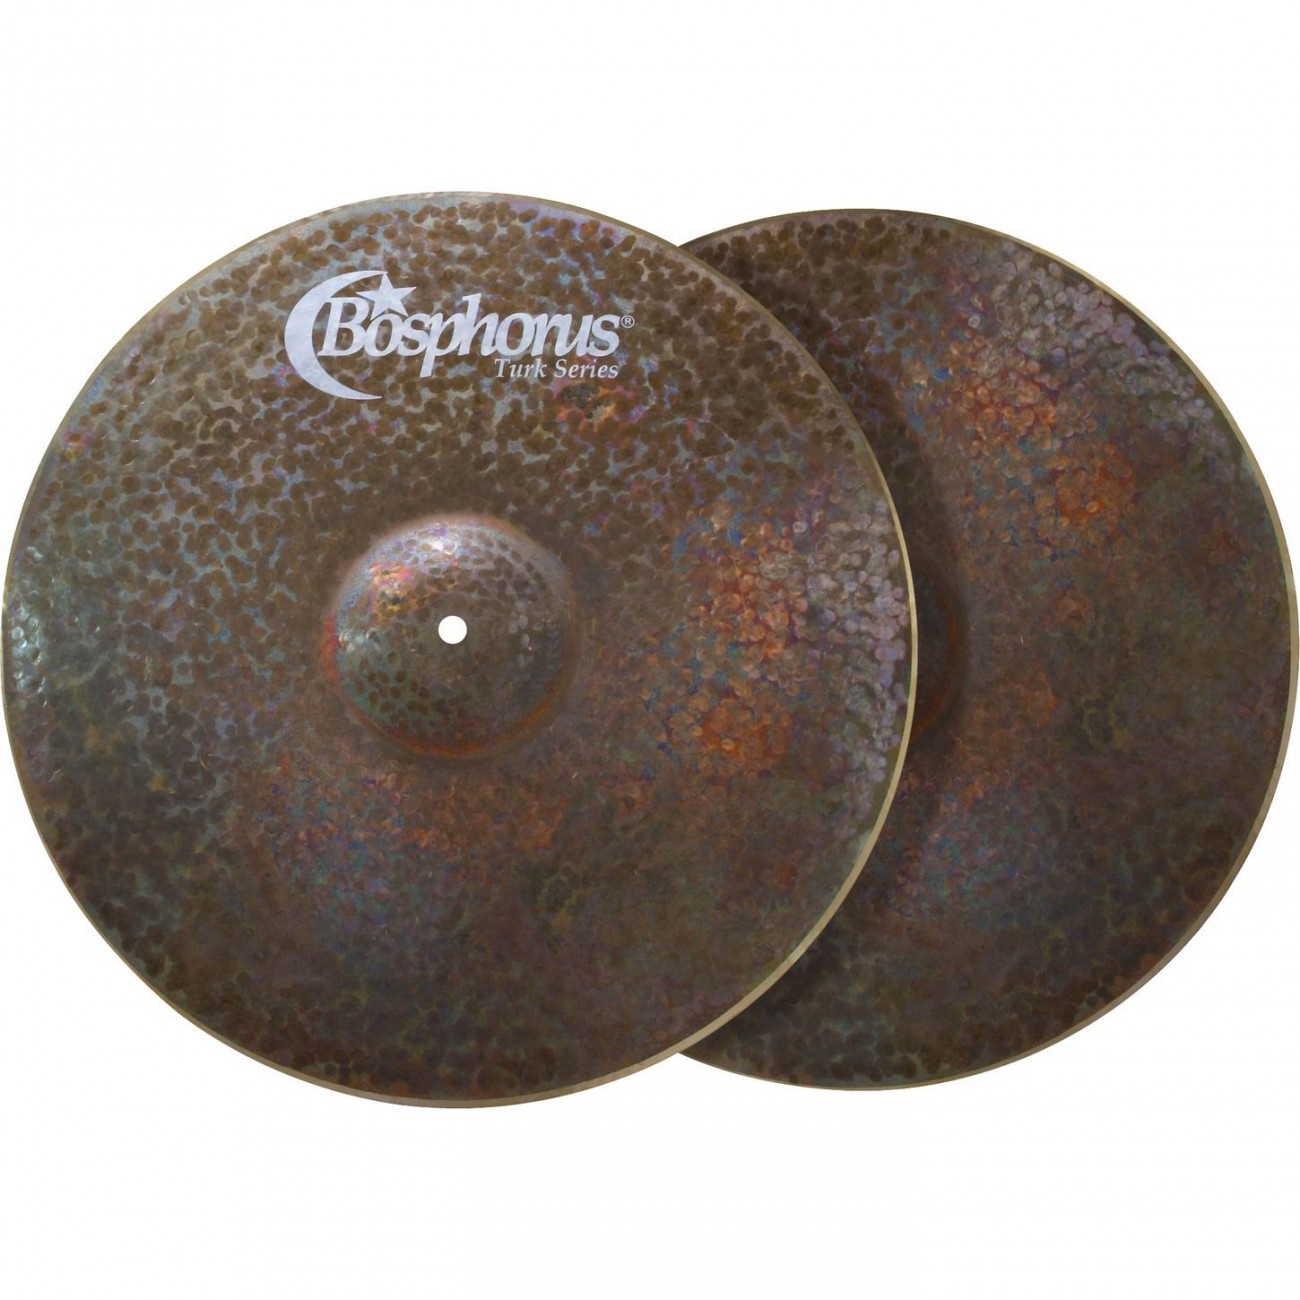 Bosphorus Cymbals K13HB 13-Inch Turk Series Hi-Hat Cymbals Pair 